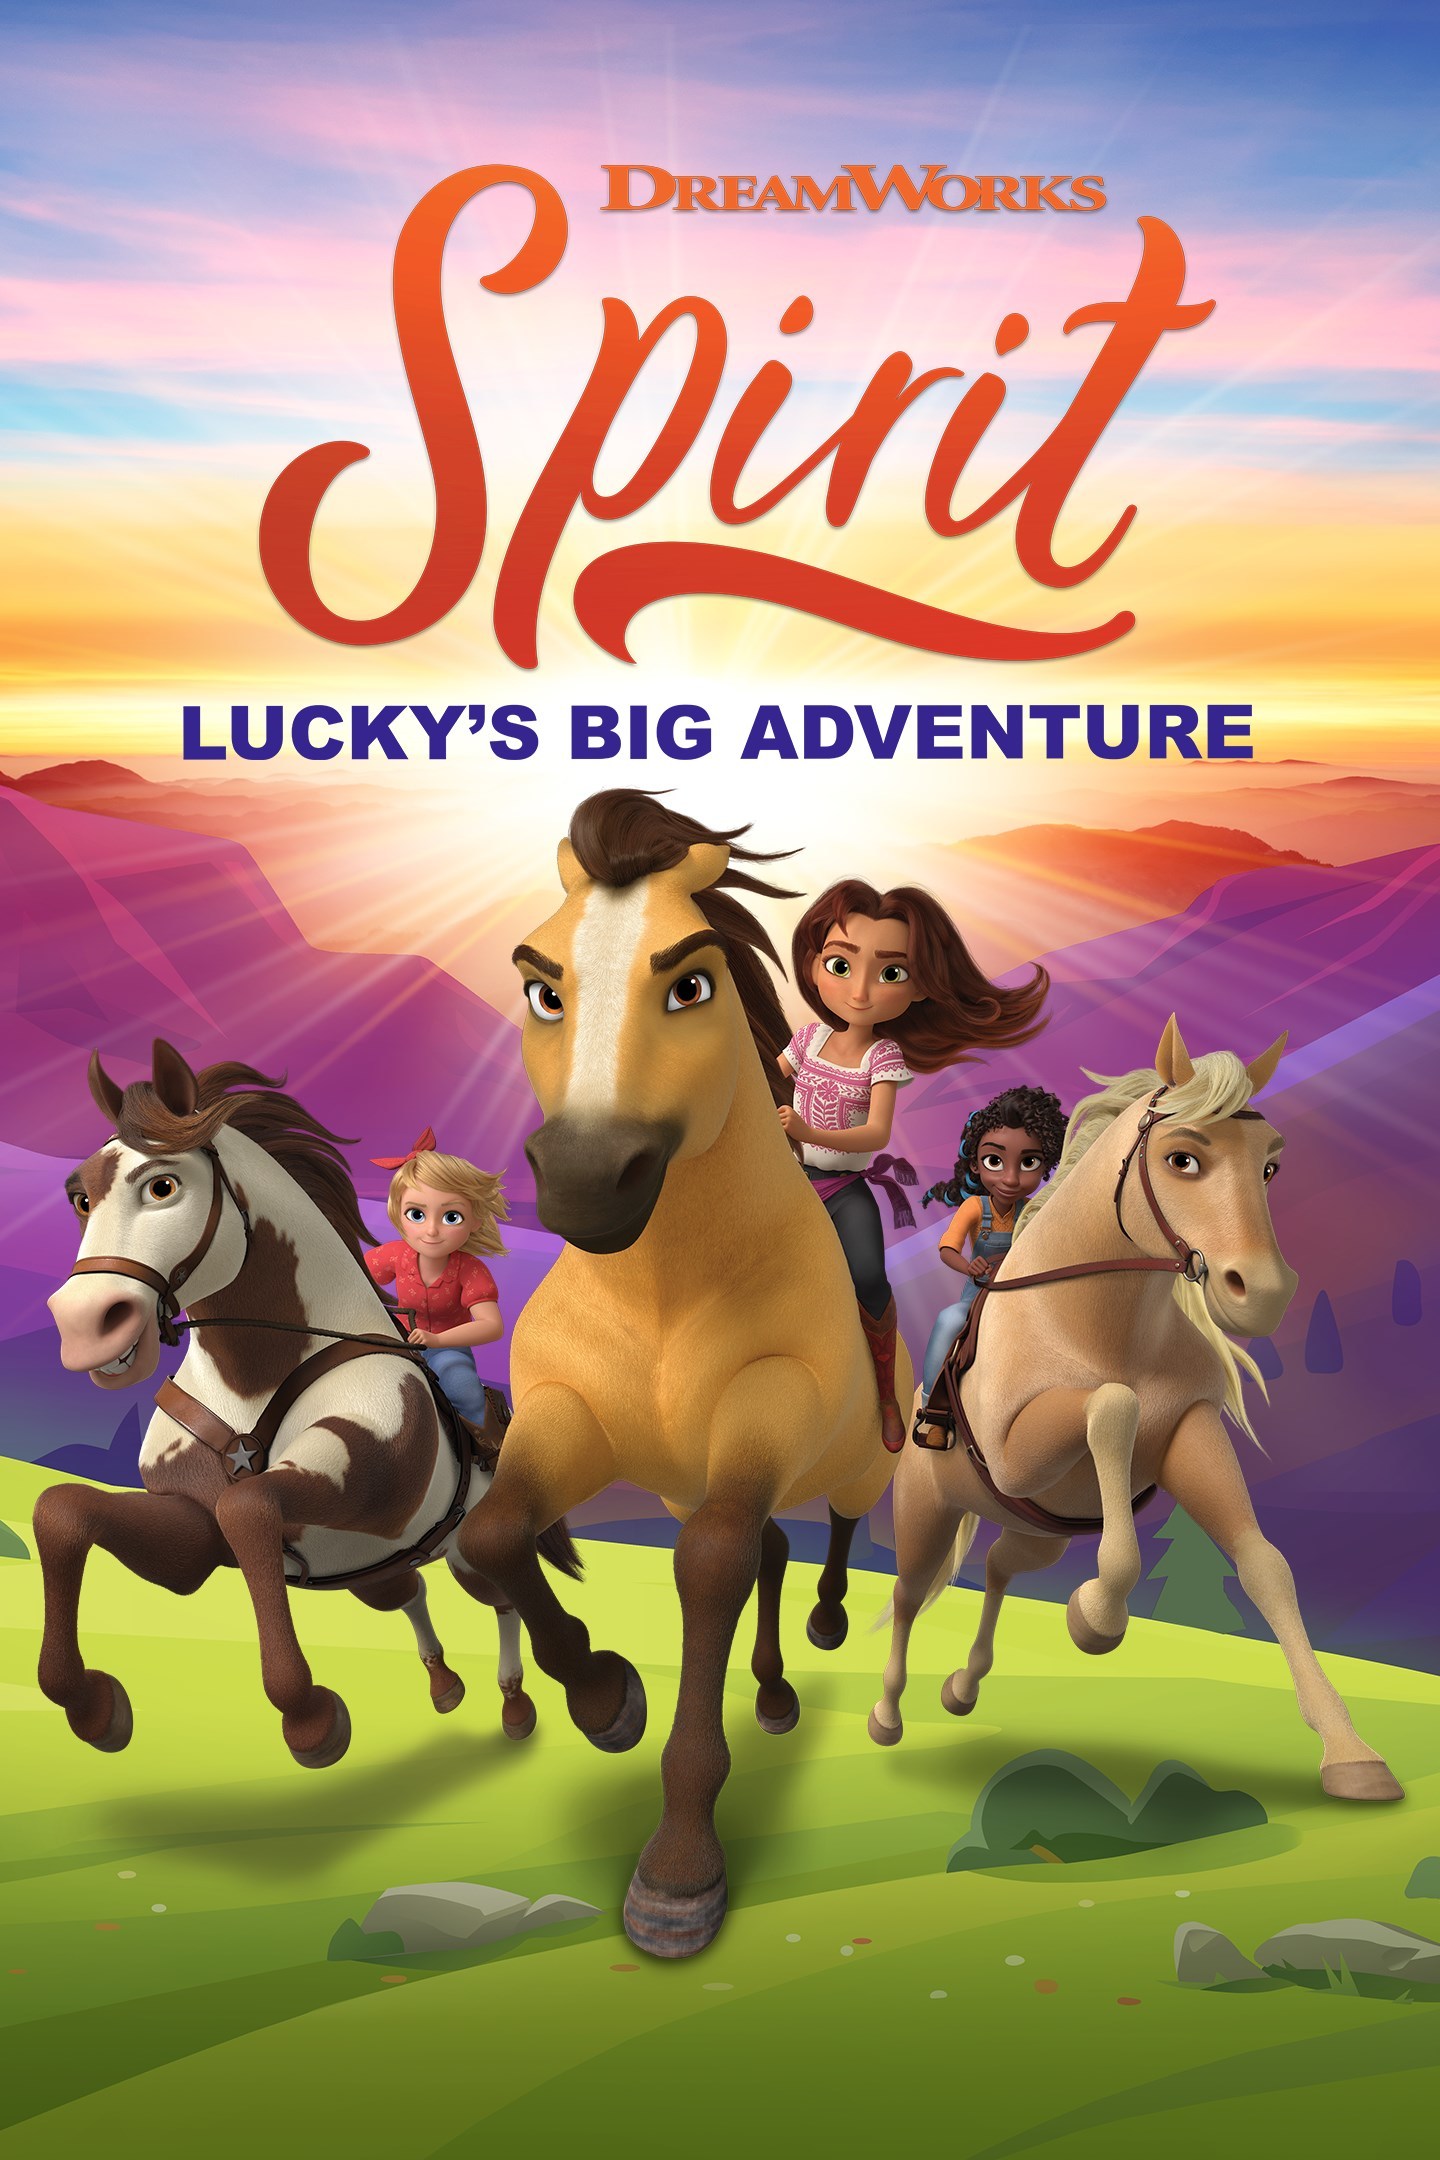 DreamWorks Spirit Lucky’s Big Adventure